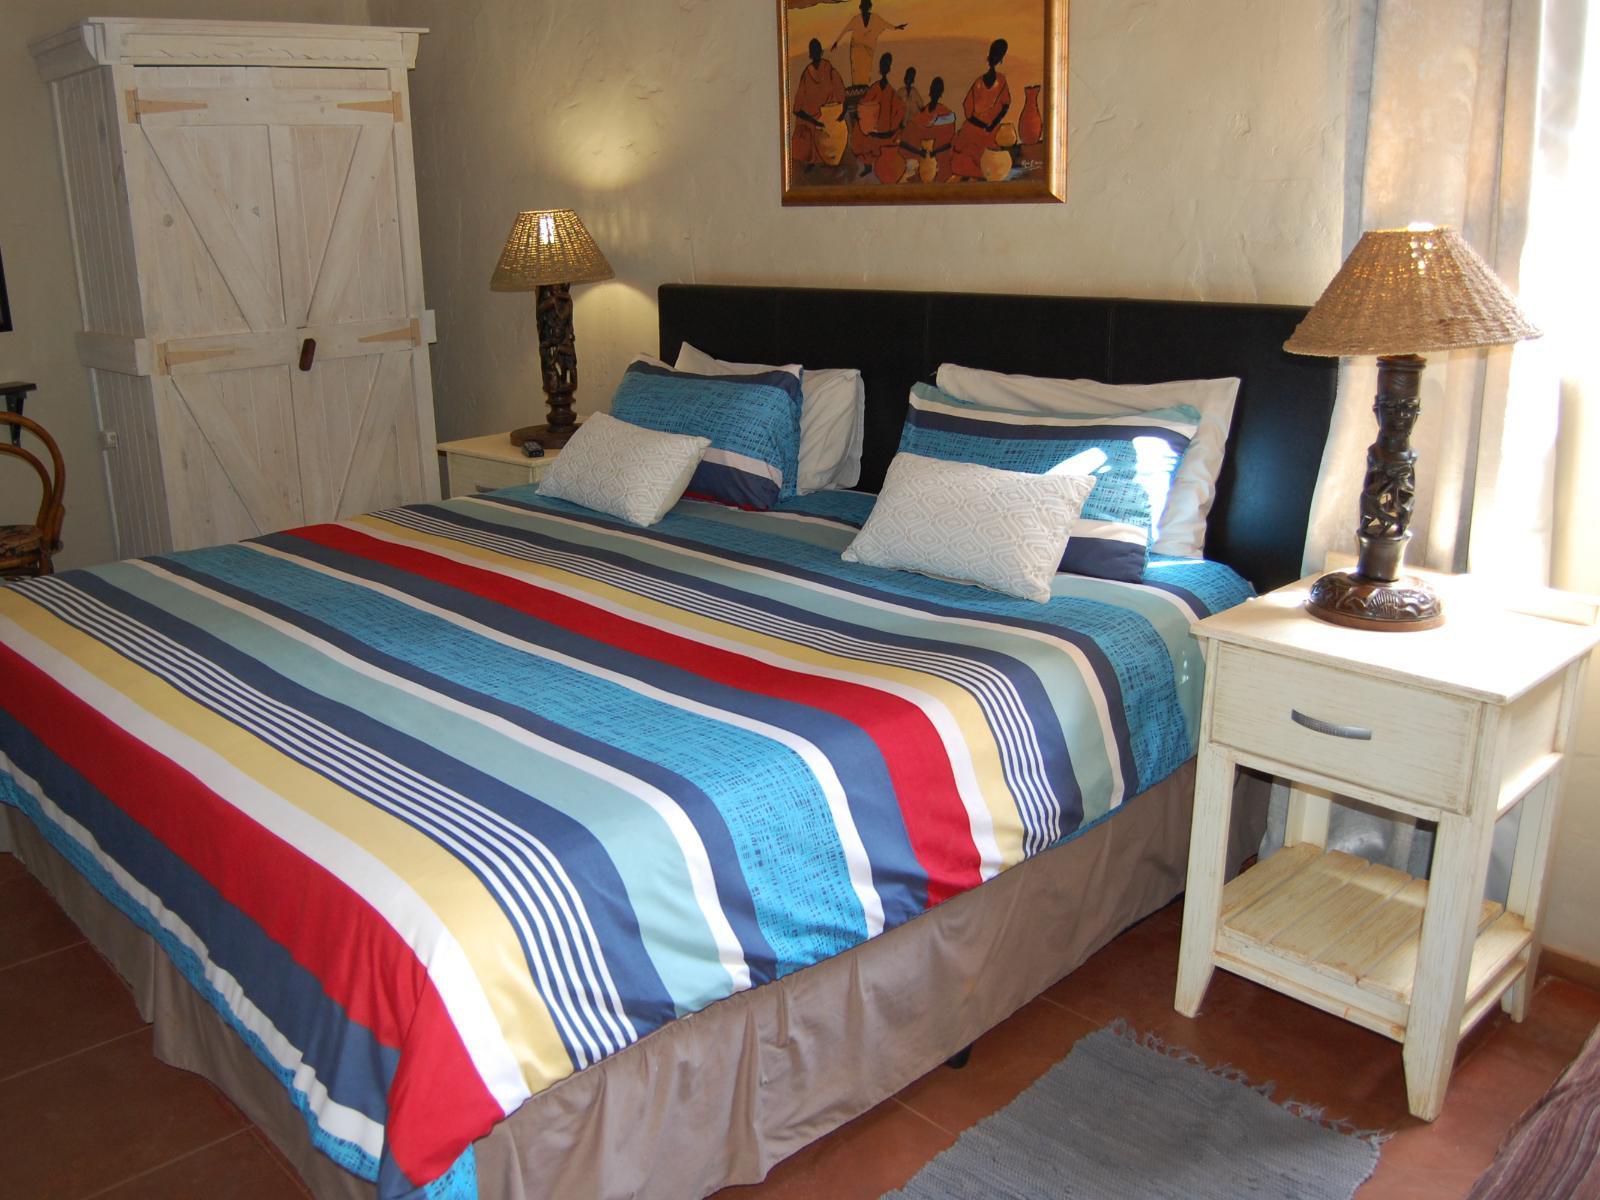 Gallery Inn Bela Bela Warmbaths Limpopo Province South Africa Bedroom